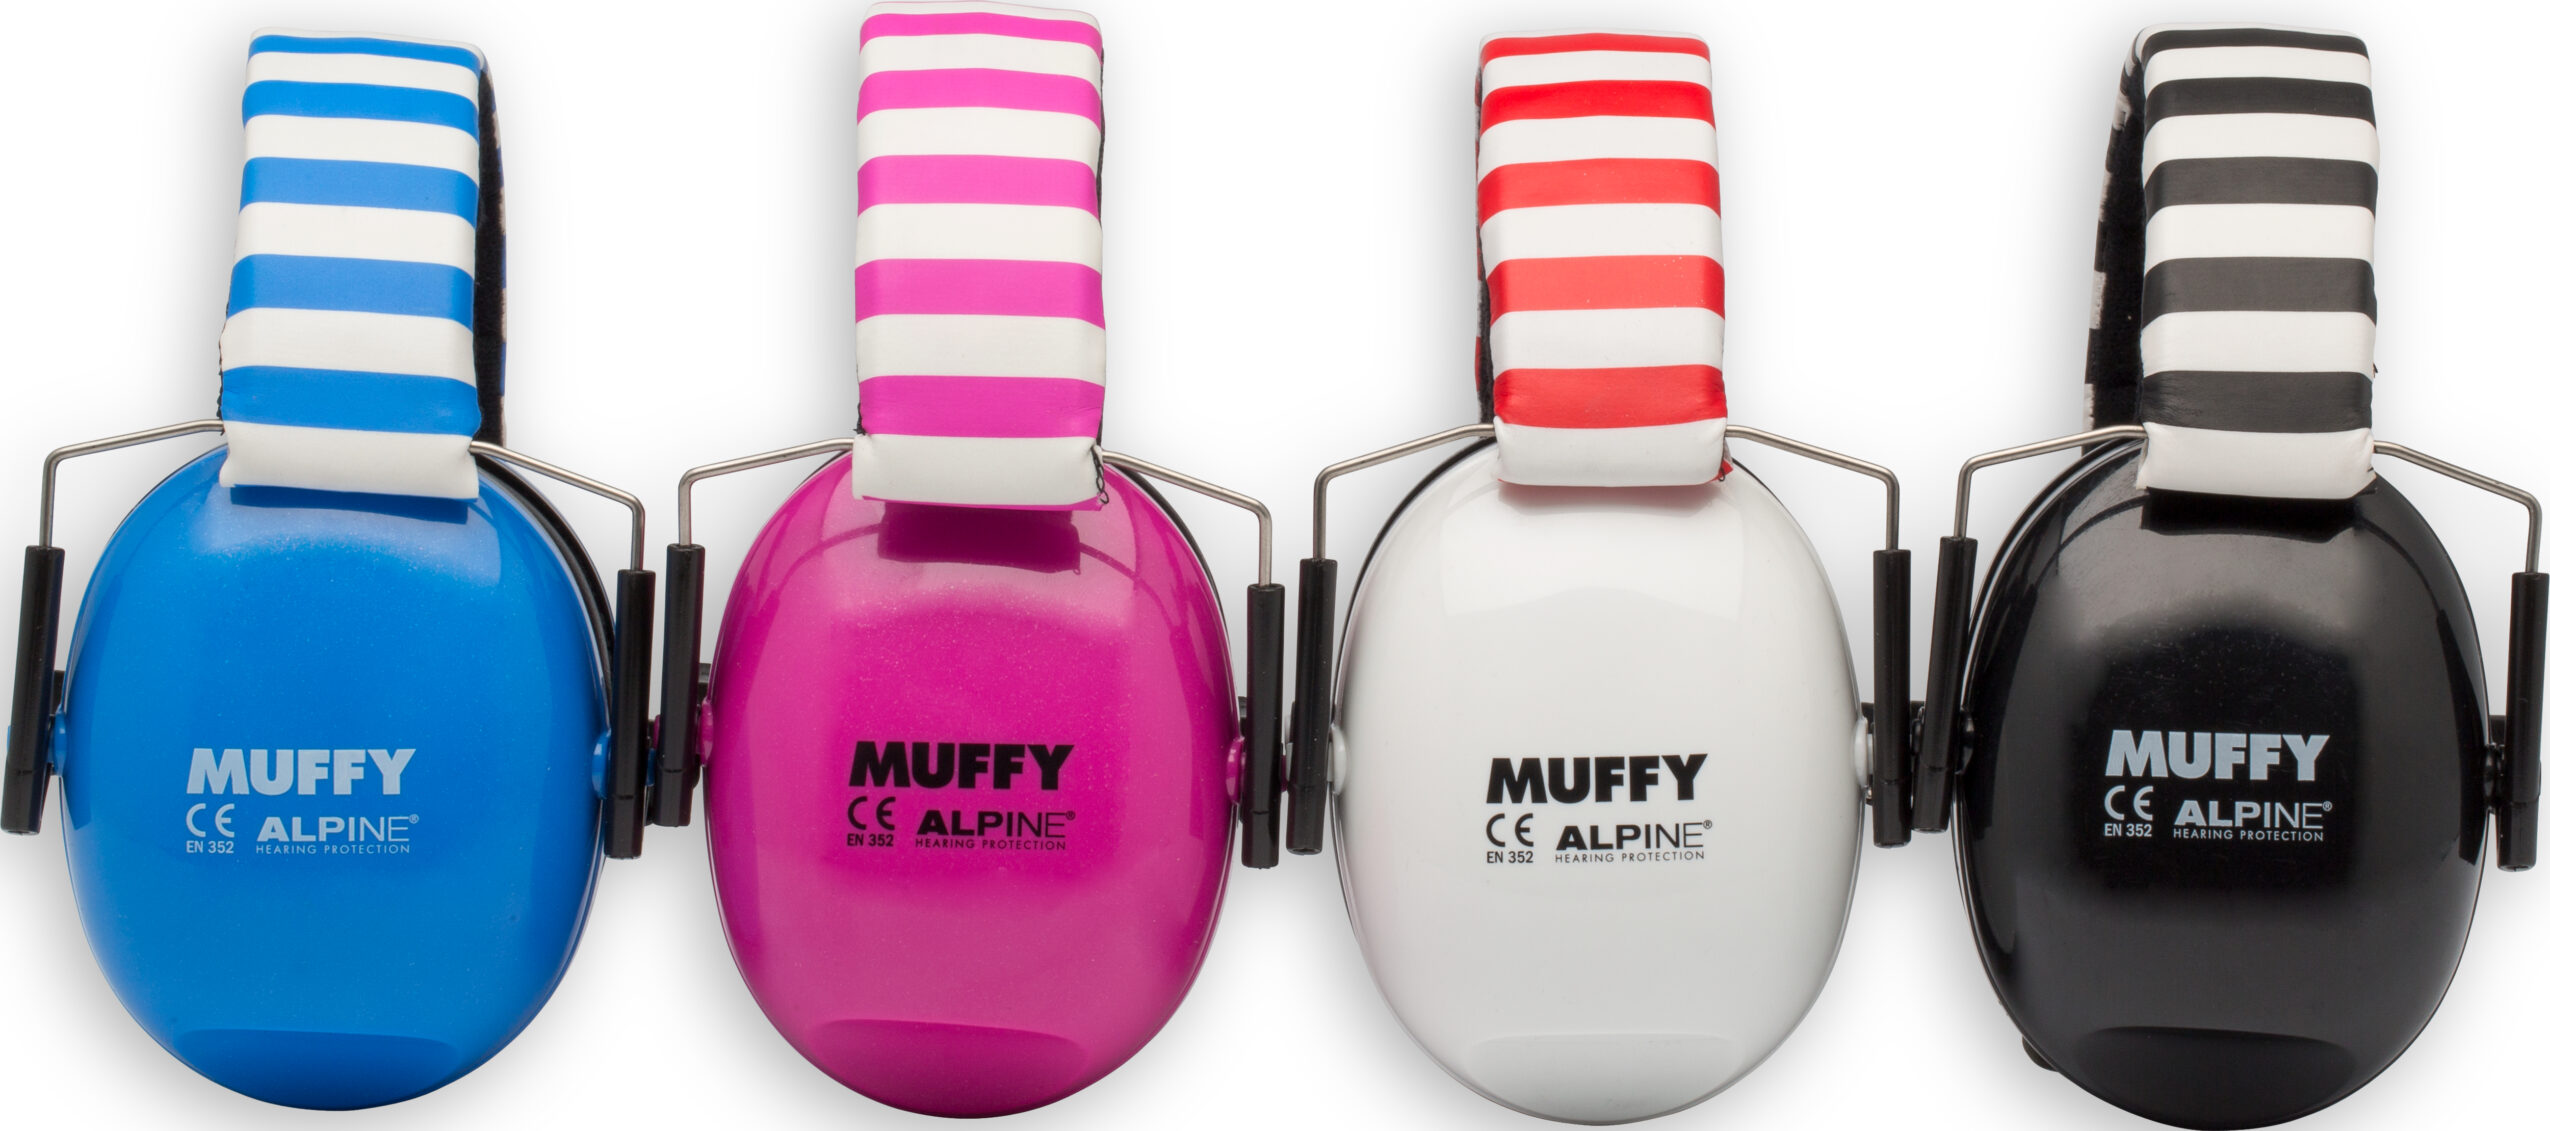 alpine-muffy-blue-pink-white-and-black